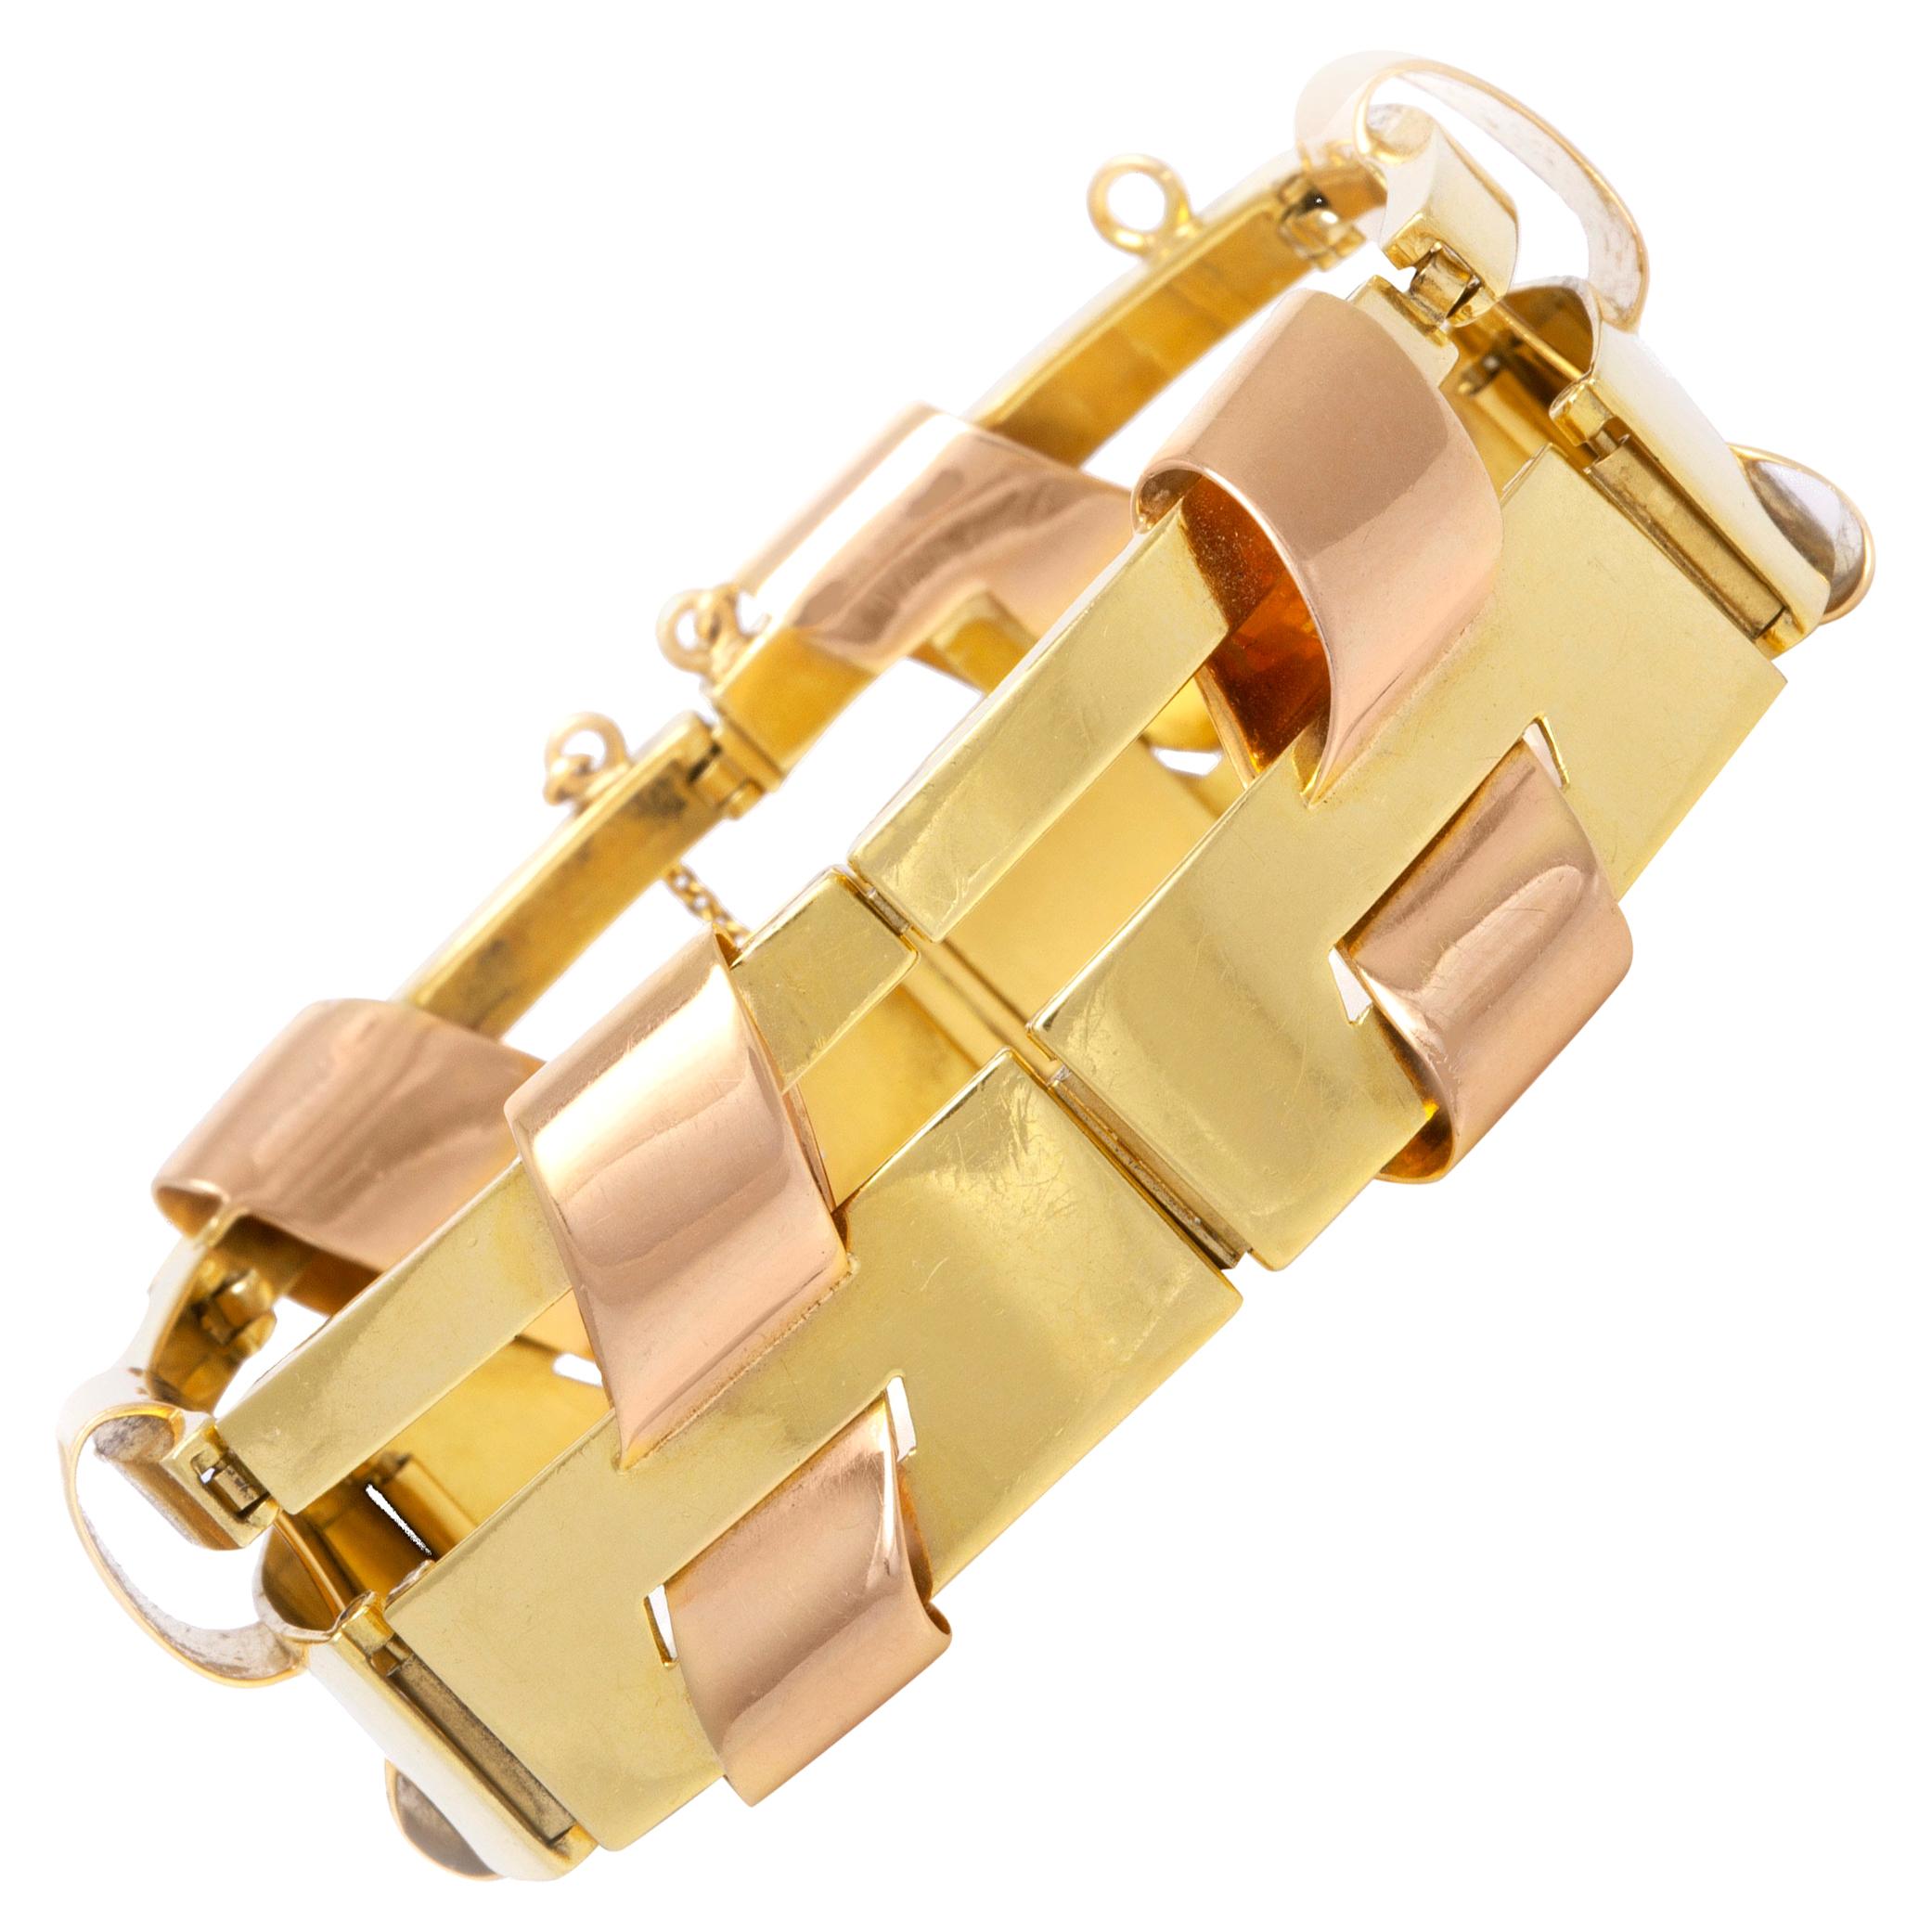 Bracelet français en or